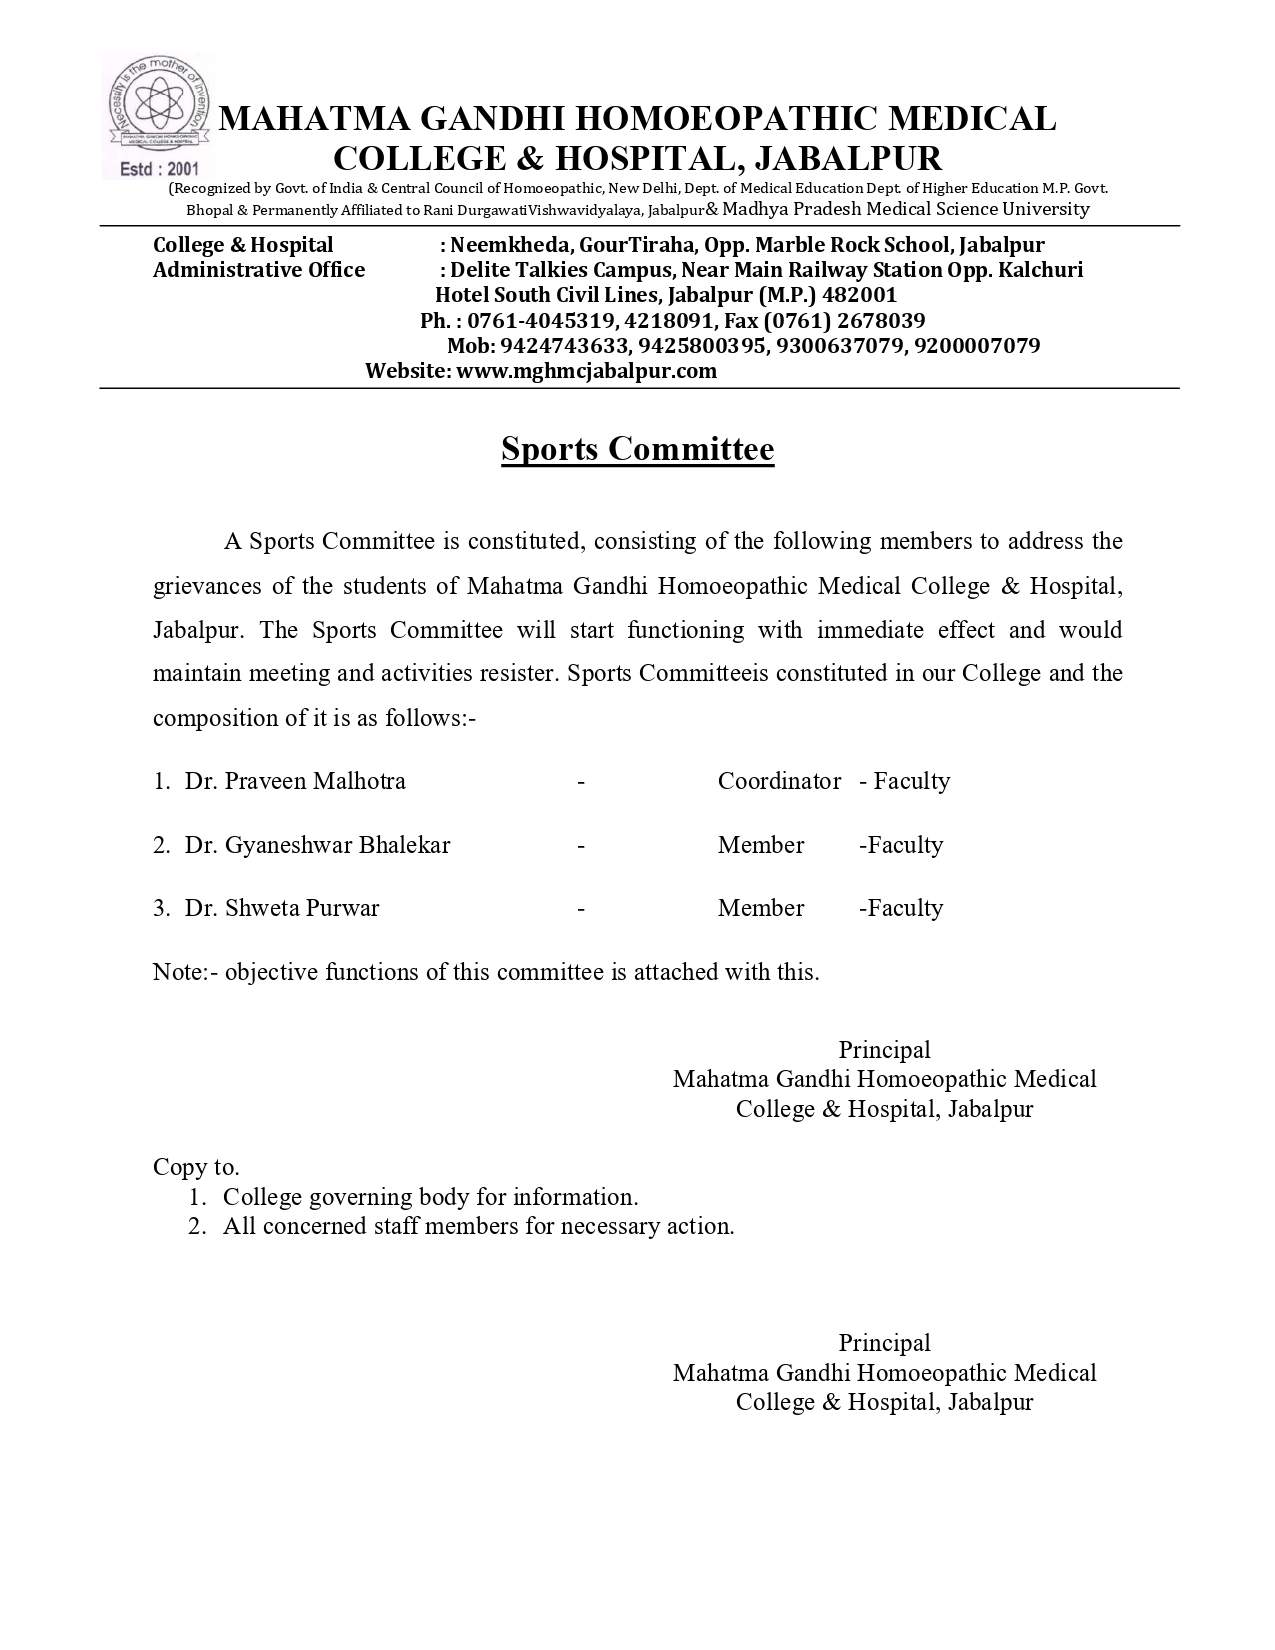 Mahatma Gandhi Homoeopathic Medical College & Hospital Sports Committee